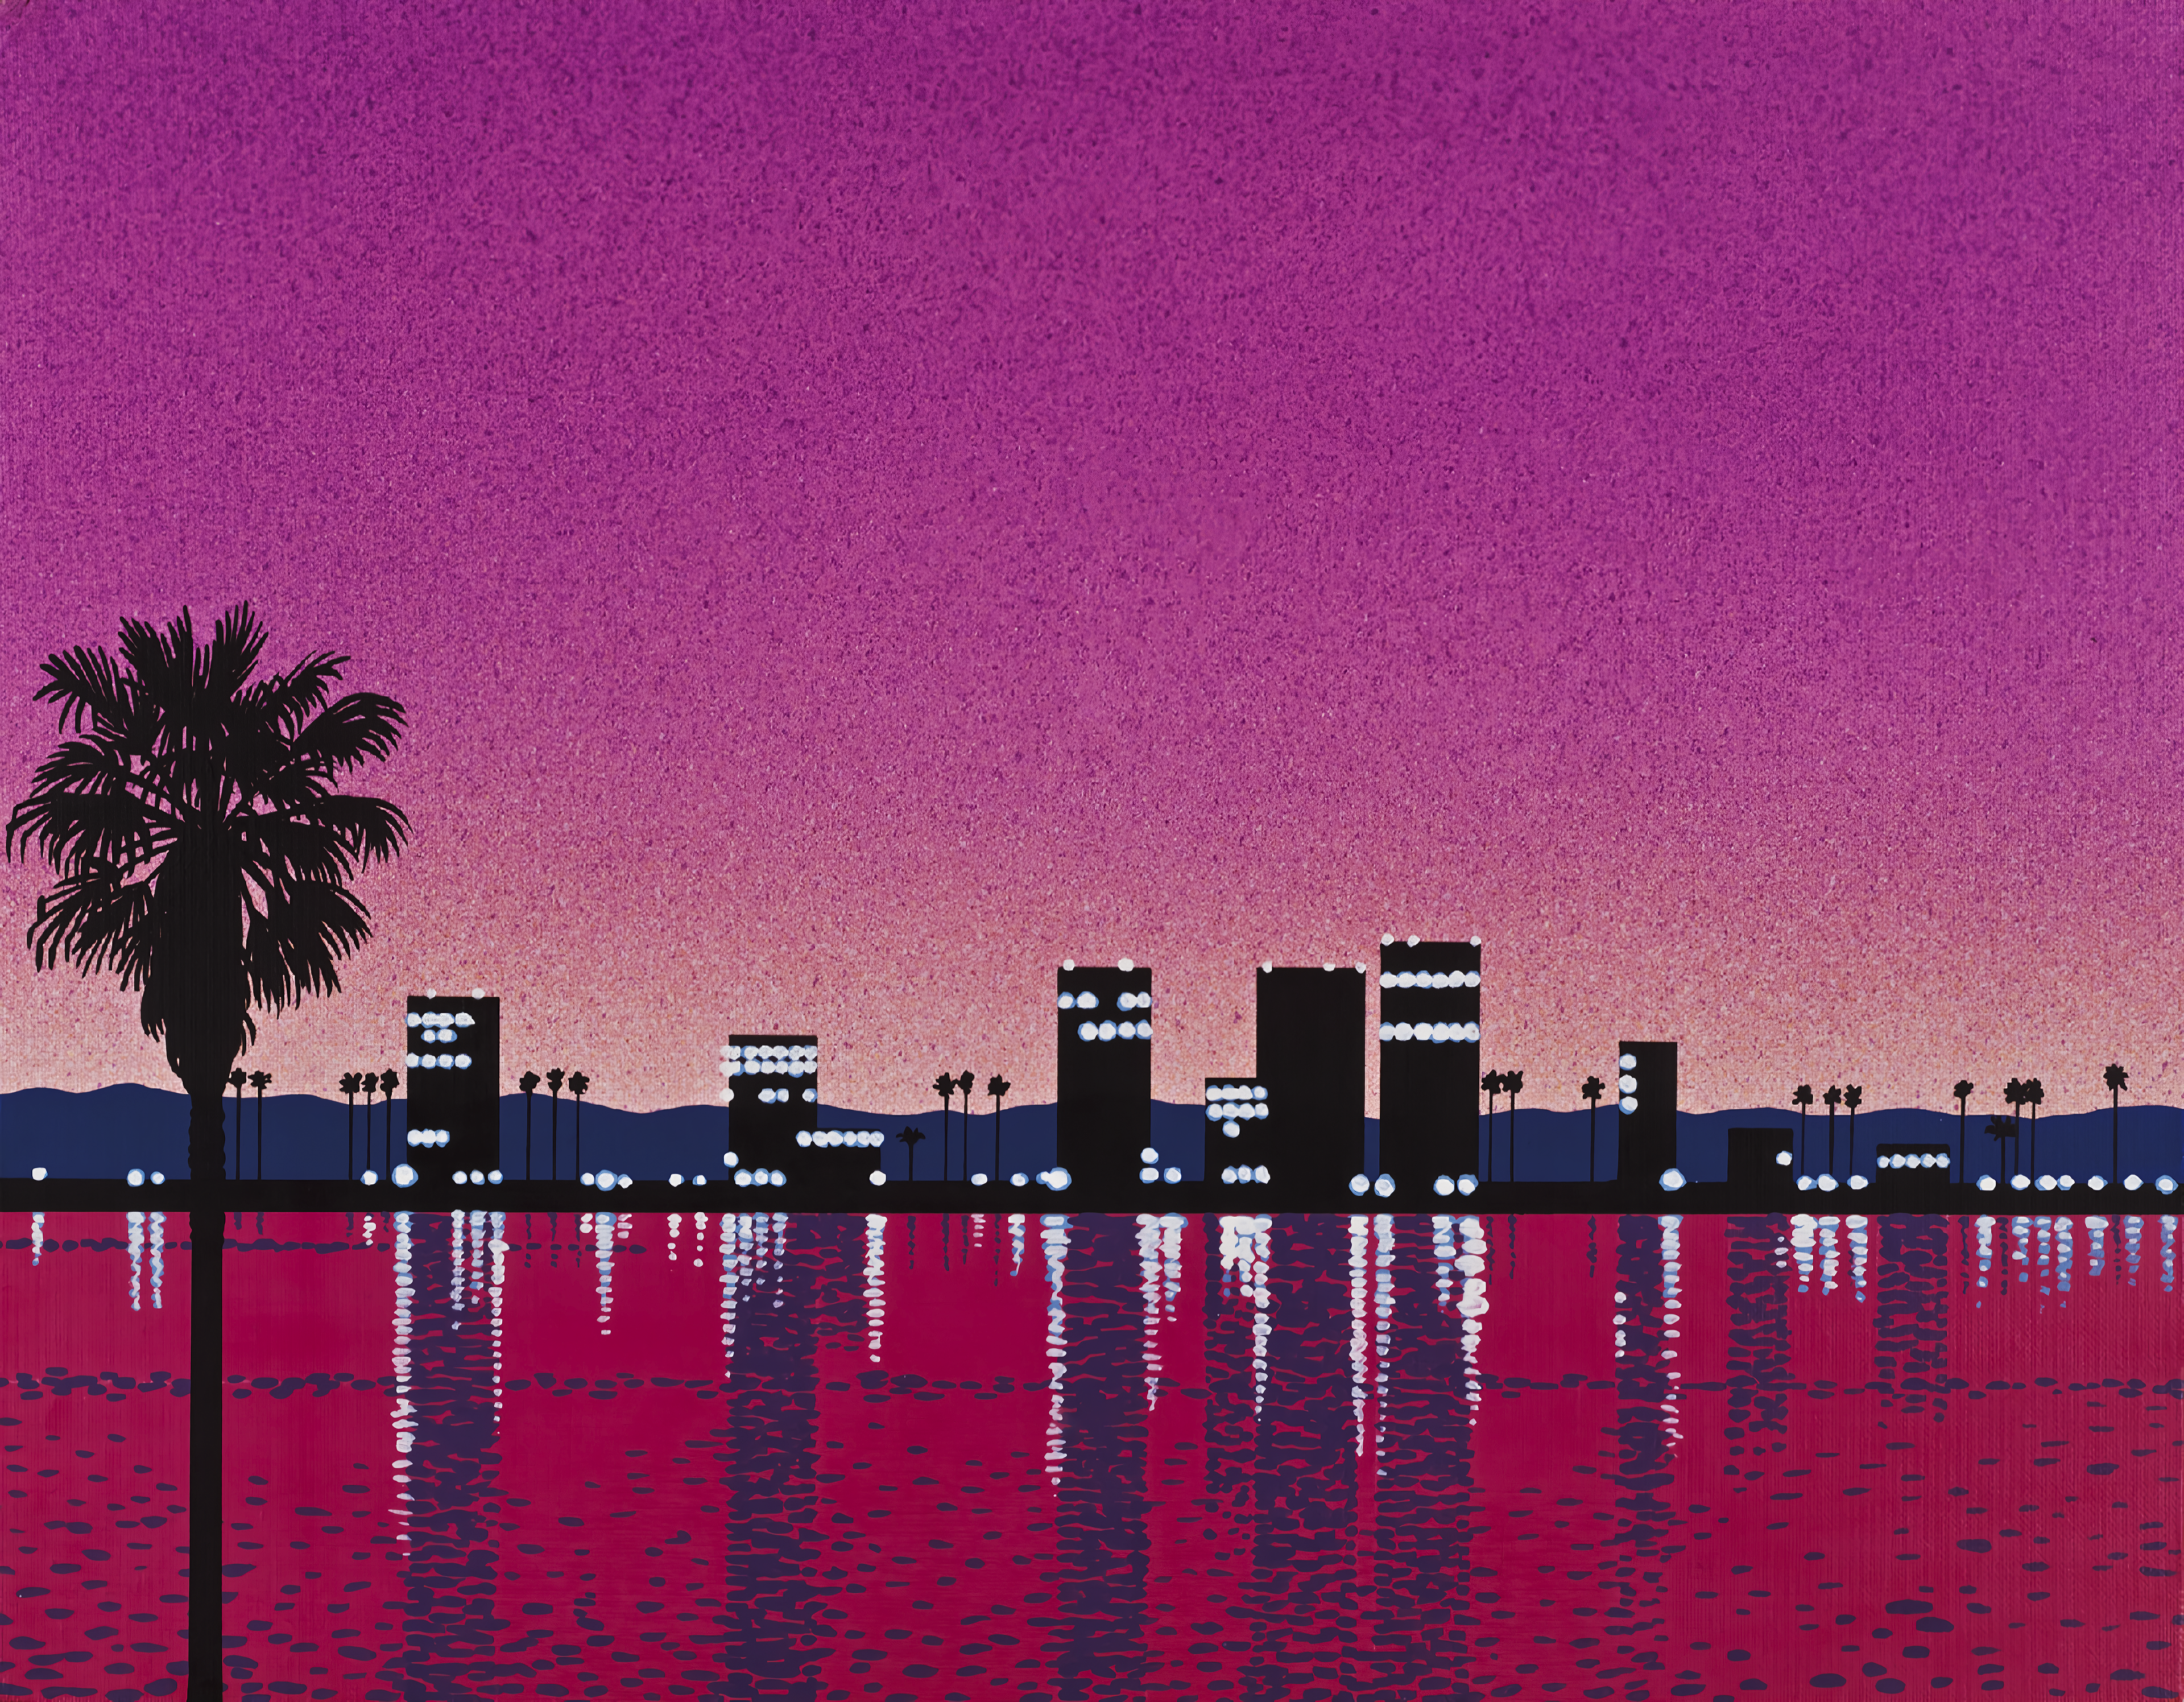 General 3840x2992 Hiroshi Nagai retrowave painting water palm trees cityscape lights pink digital art